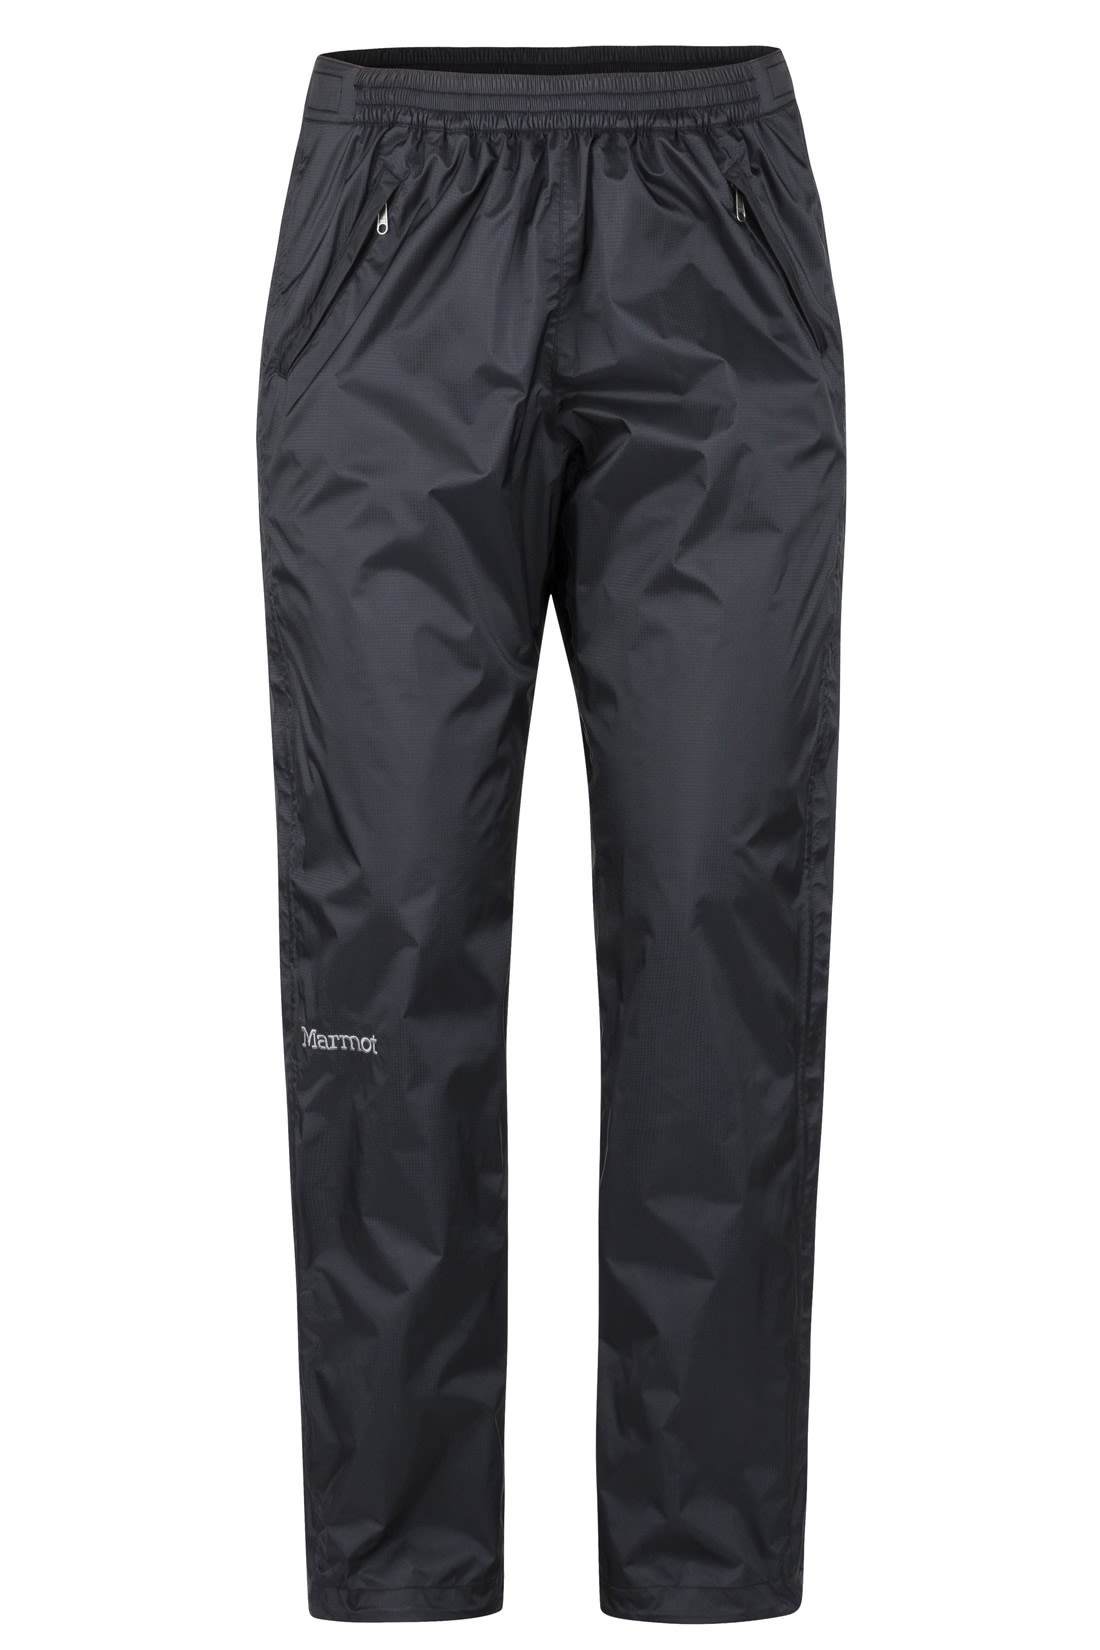 Marmot Precip ECO Full Zip Pant Schwarz- Female Jogginghosen- Grsse XS - Farbe Black